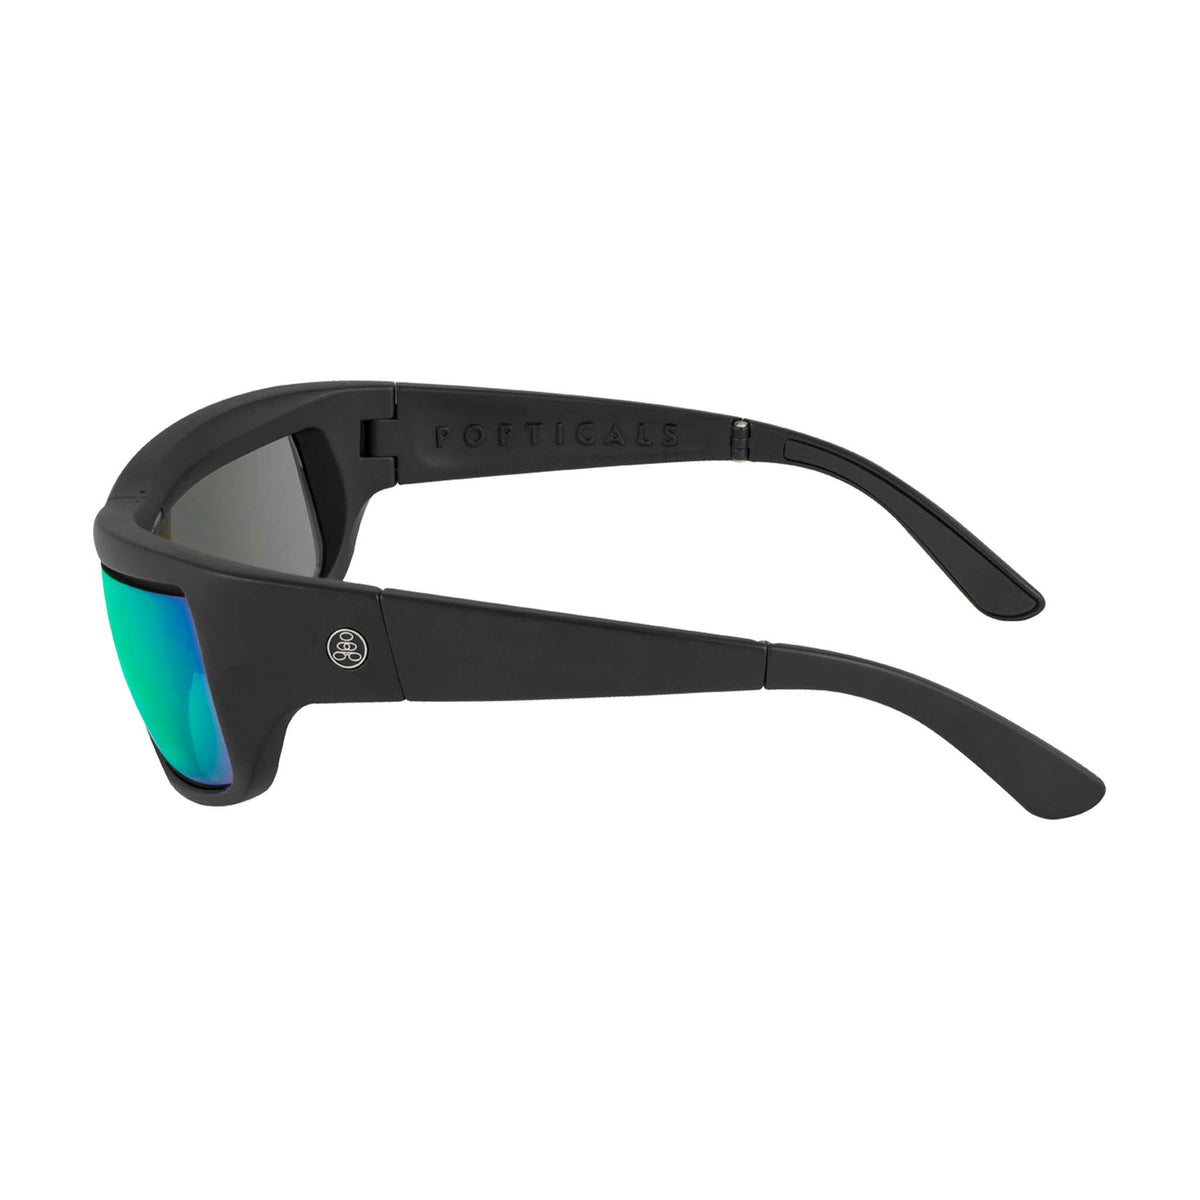 Popticals, Premium Compact Sunglasses, PopH2O, 010070-BMEN, Polarized Sunglasses, Matte Black Frame, Gray Lenses w/Green Mirror Finish, Side View